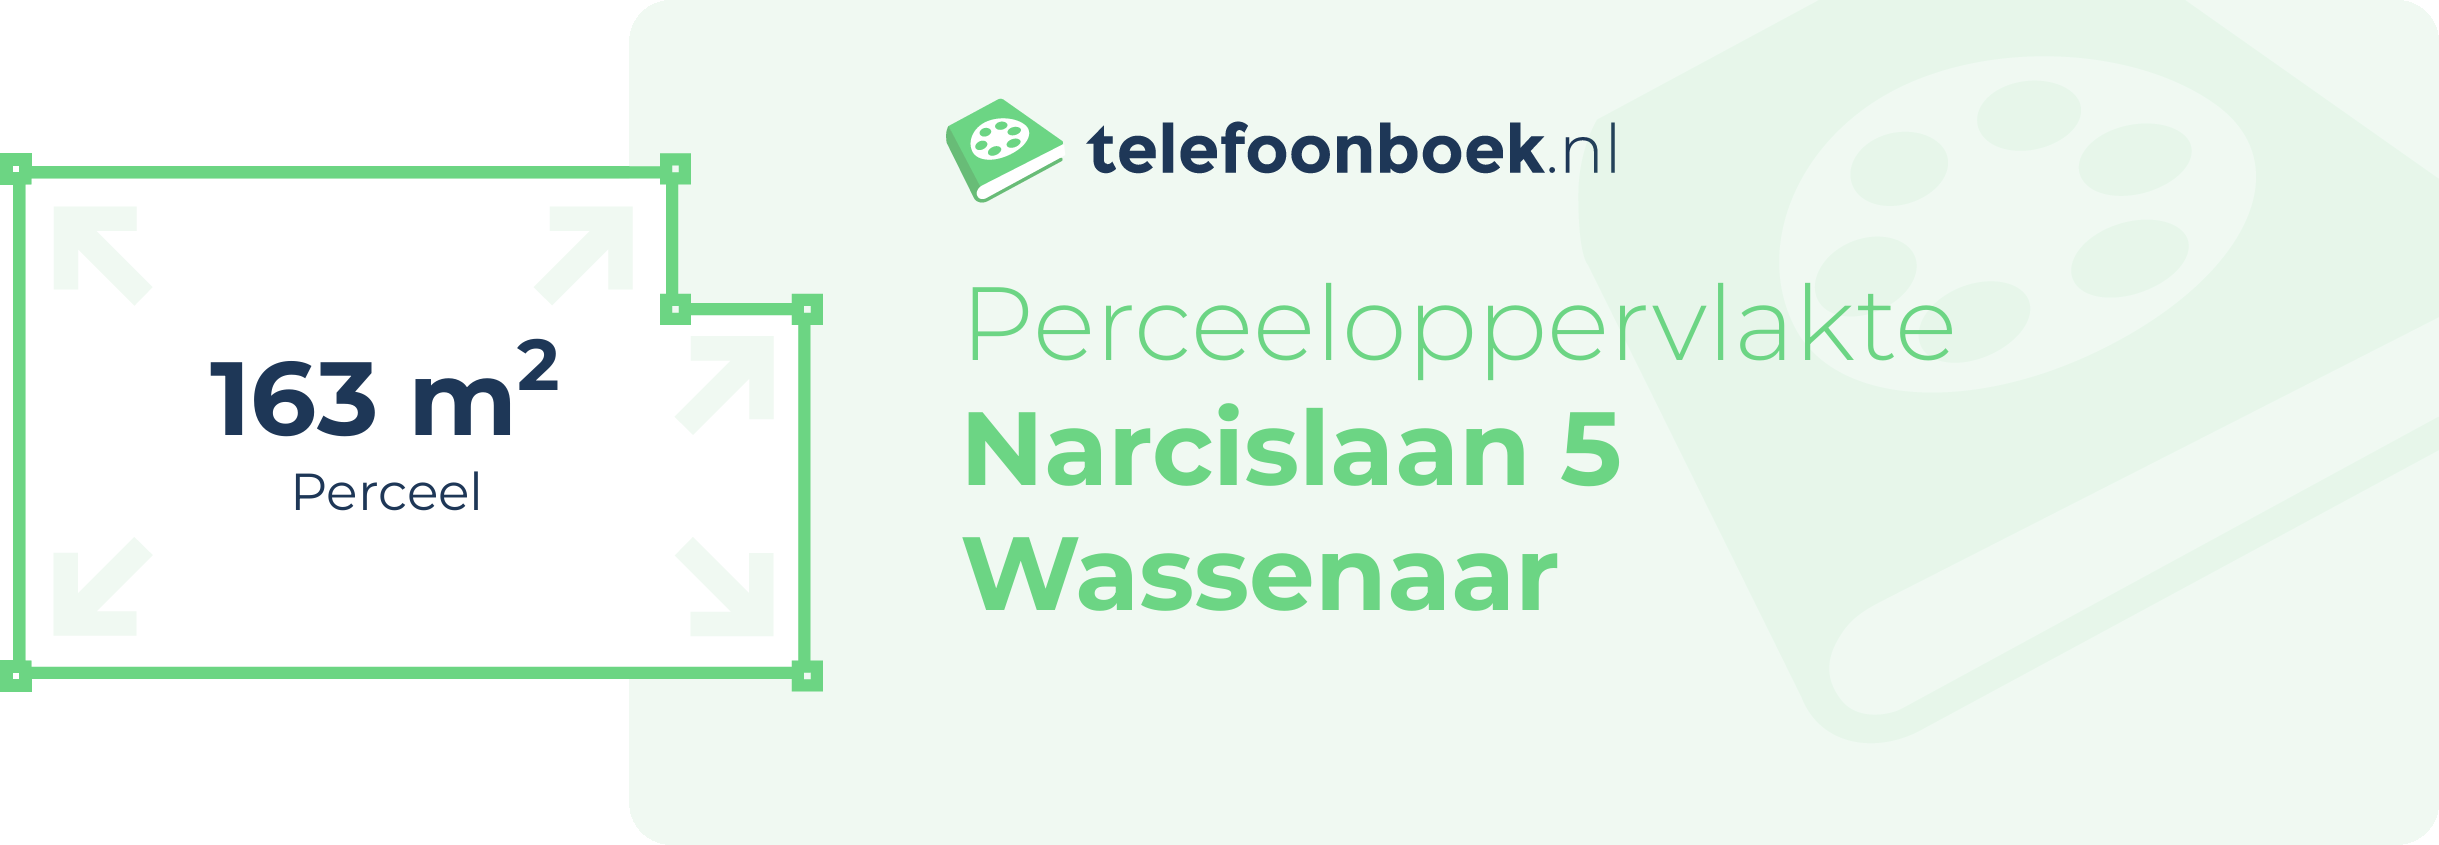 Perceeloppervlakte Narcislaan 5 Wassenaar